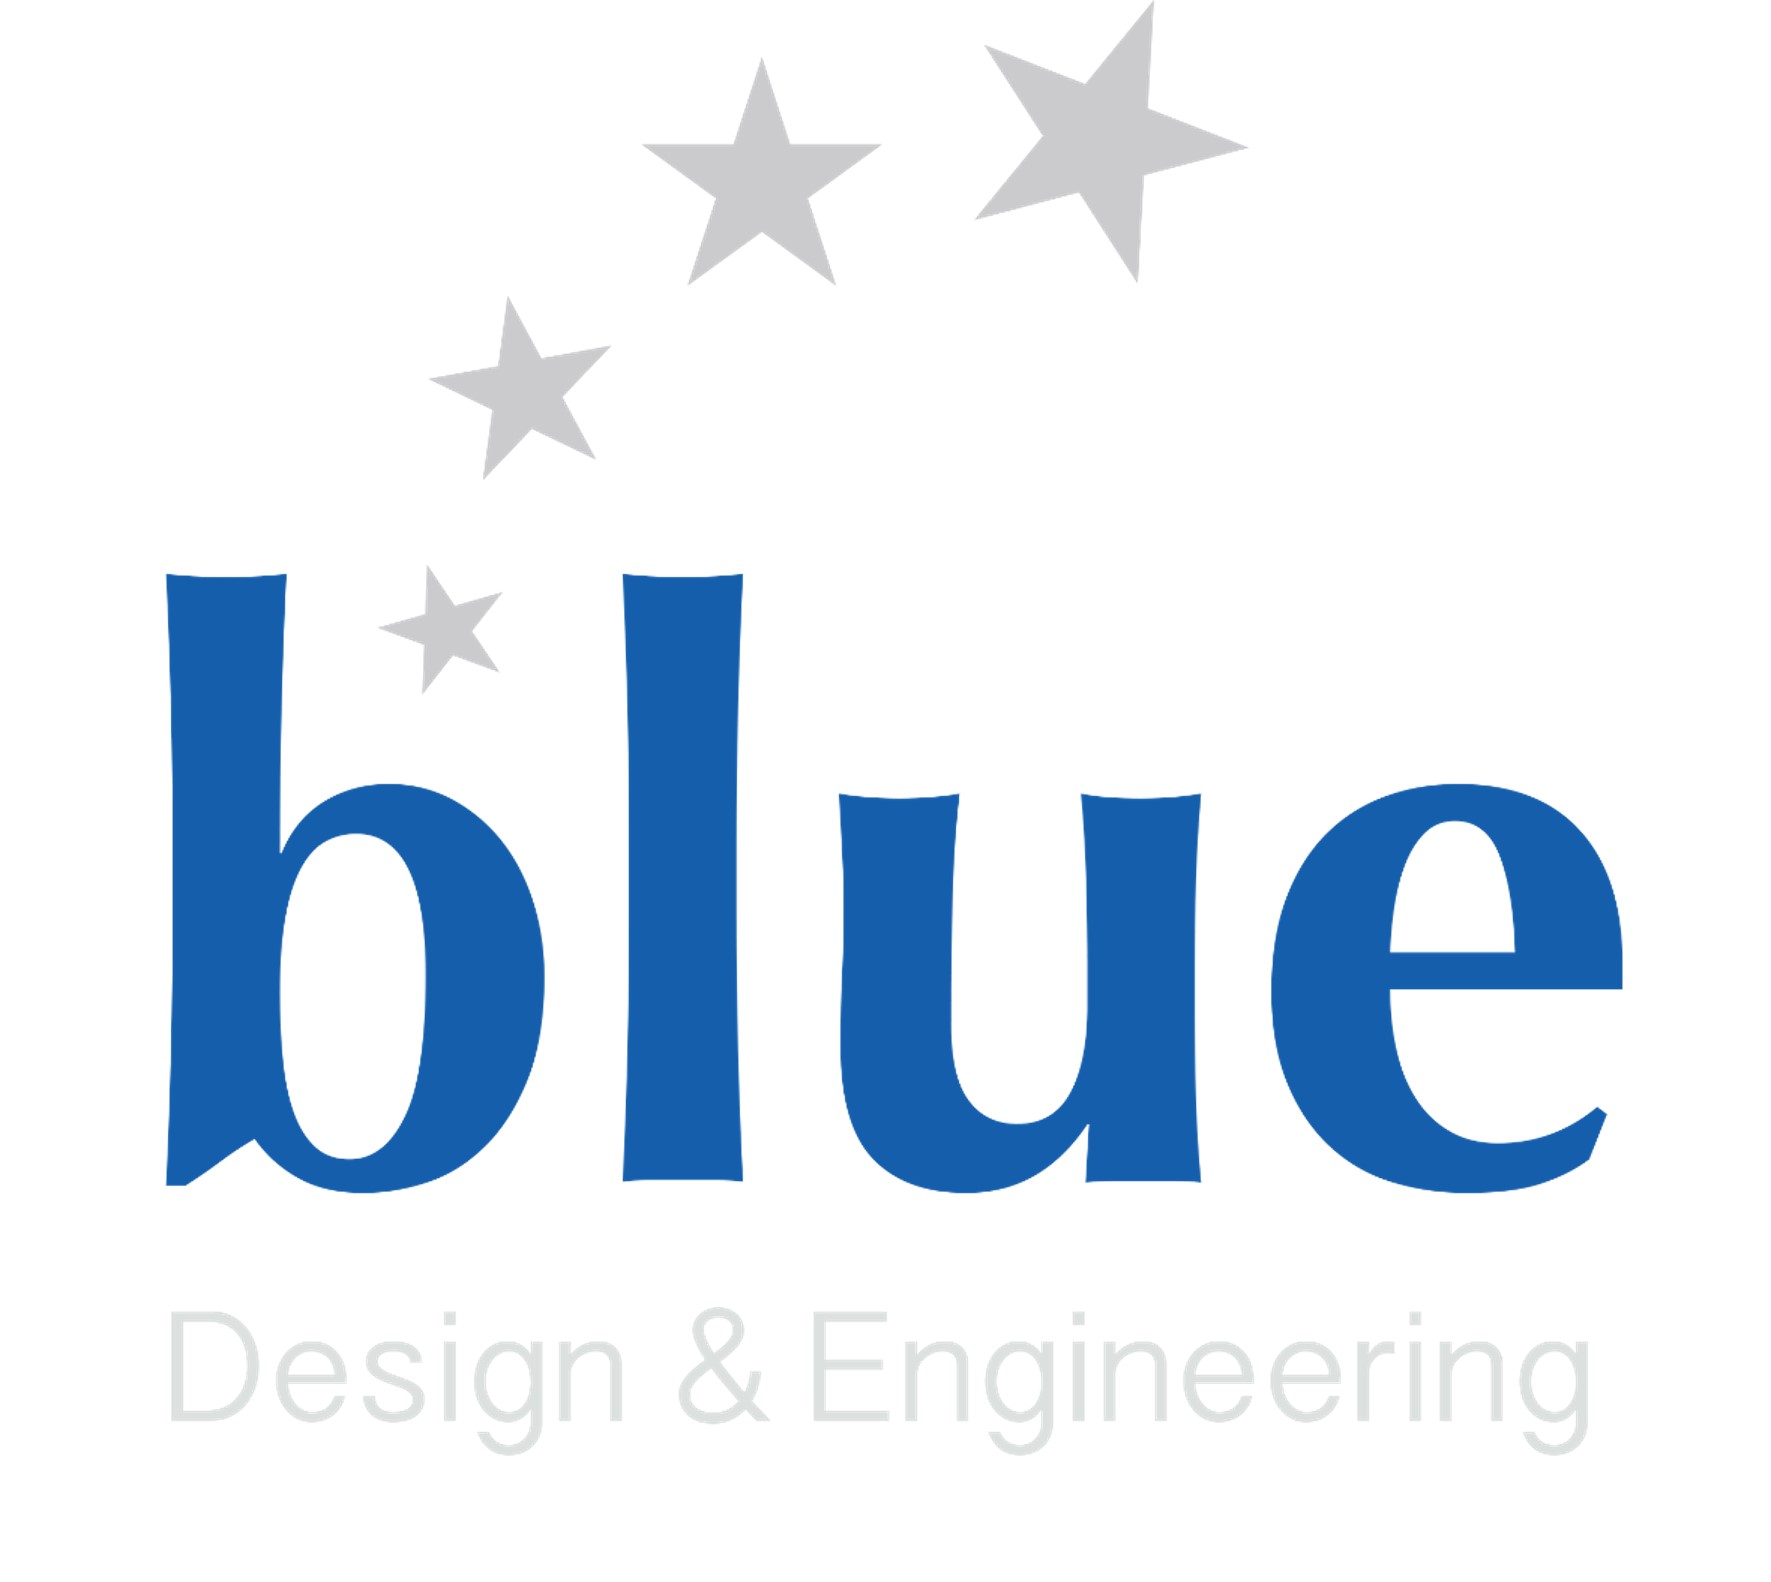 BLUE logo-blue jpg - Michele Straniero.jpg